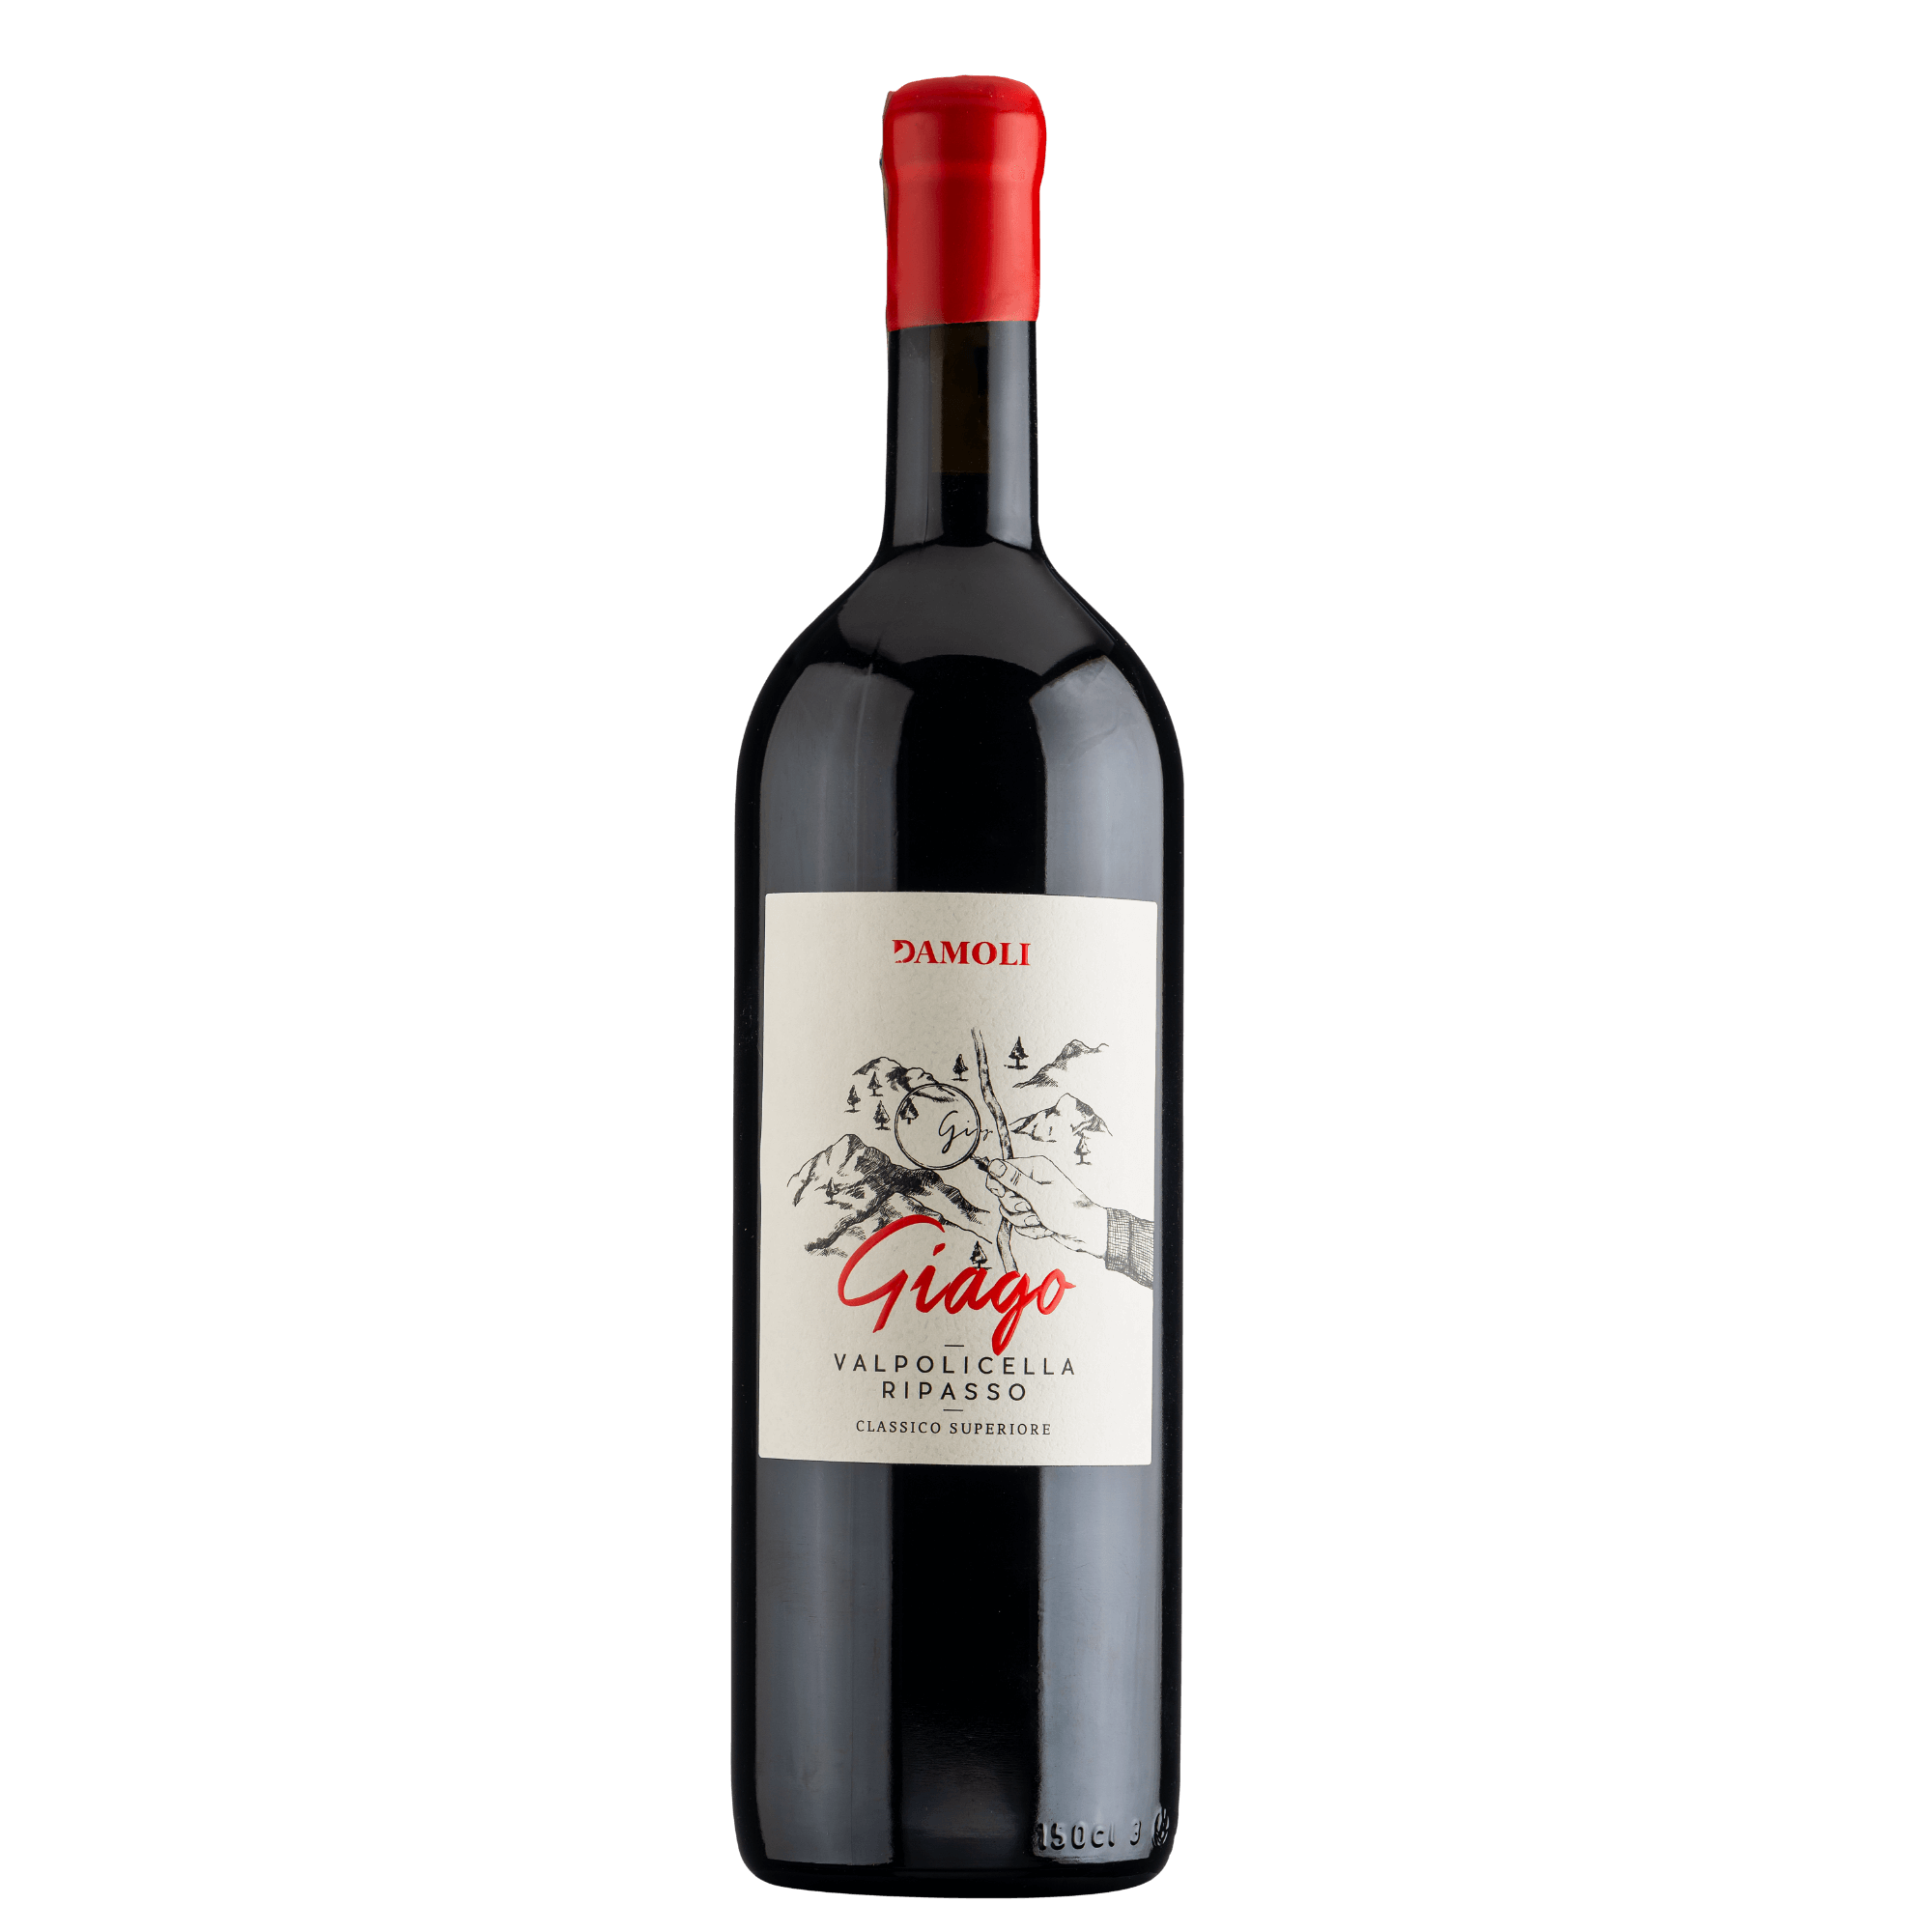 Giago Valpolicella Ripasso exclusive red wines by Damoli